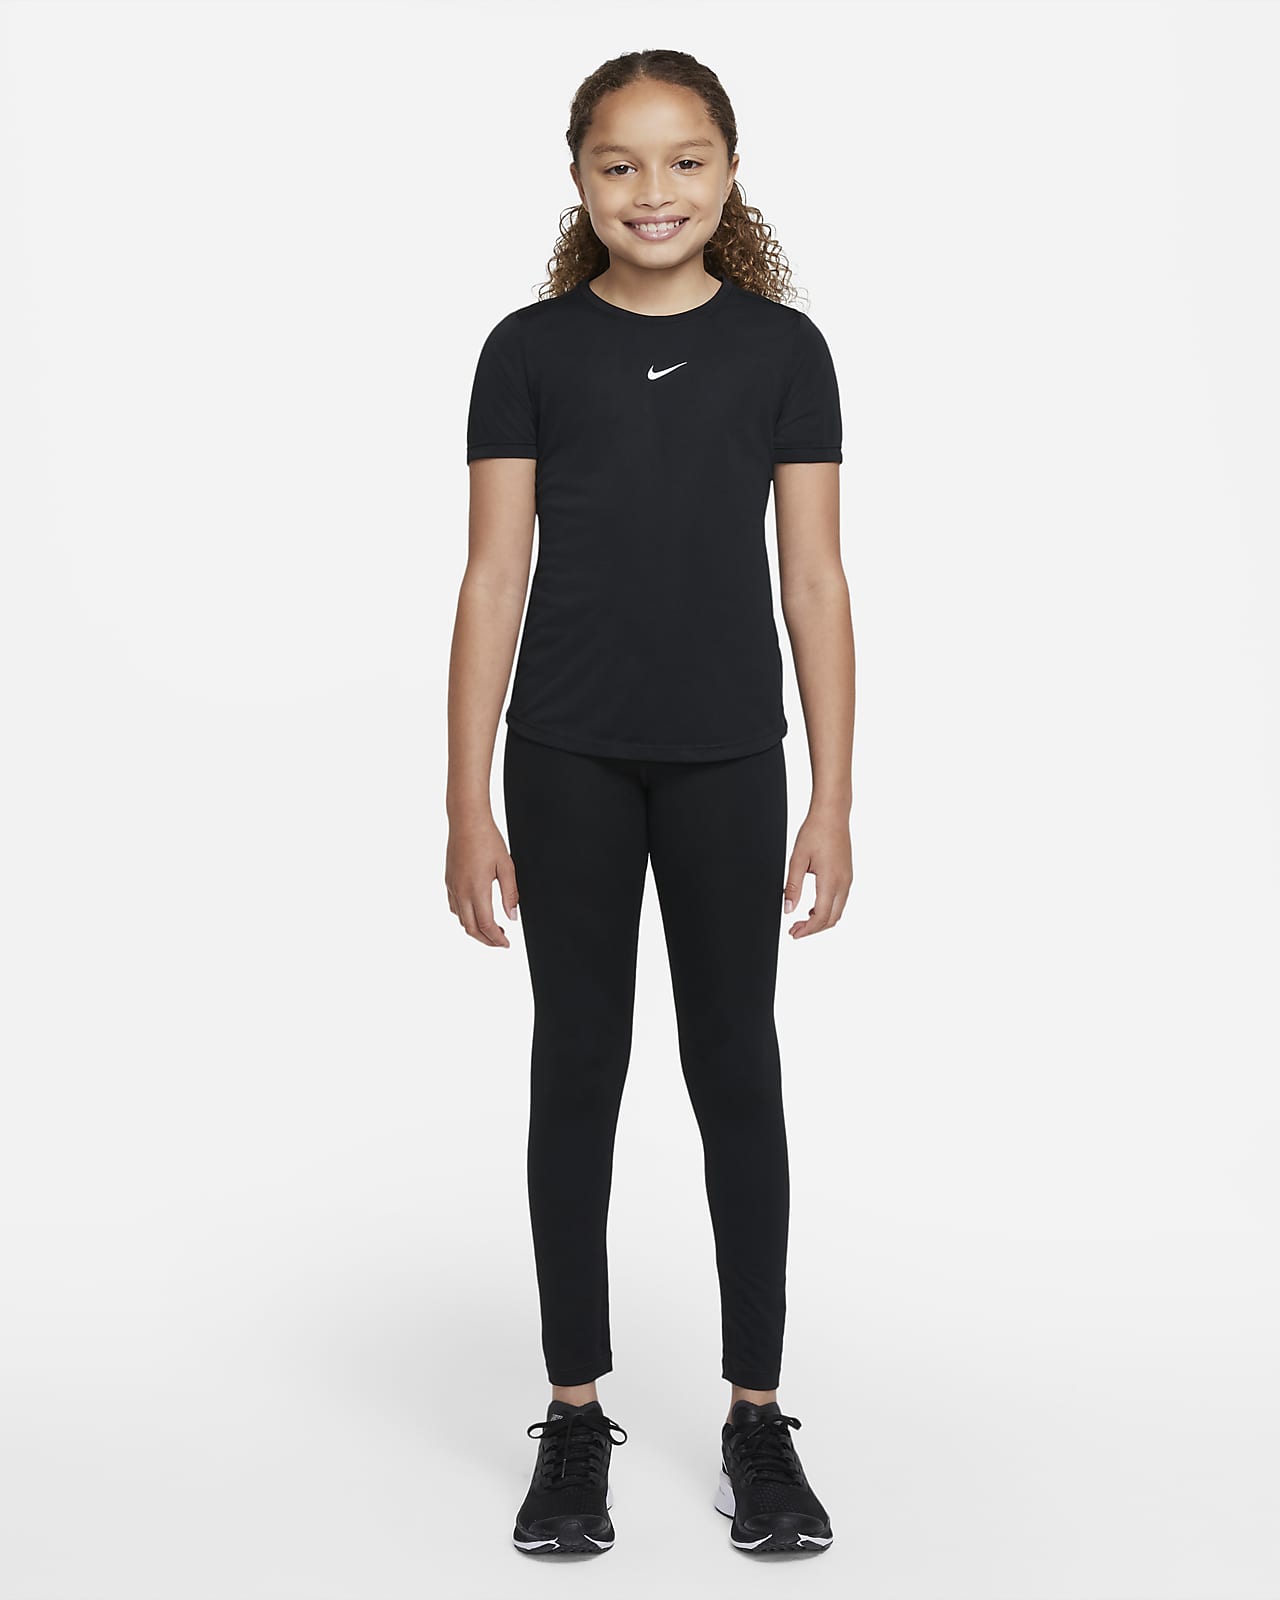 Big One Kids\' Short-Sleeve Nike Top. (Girls\')